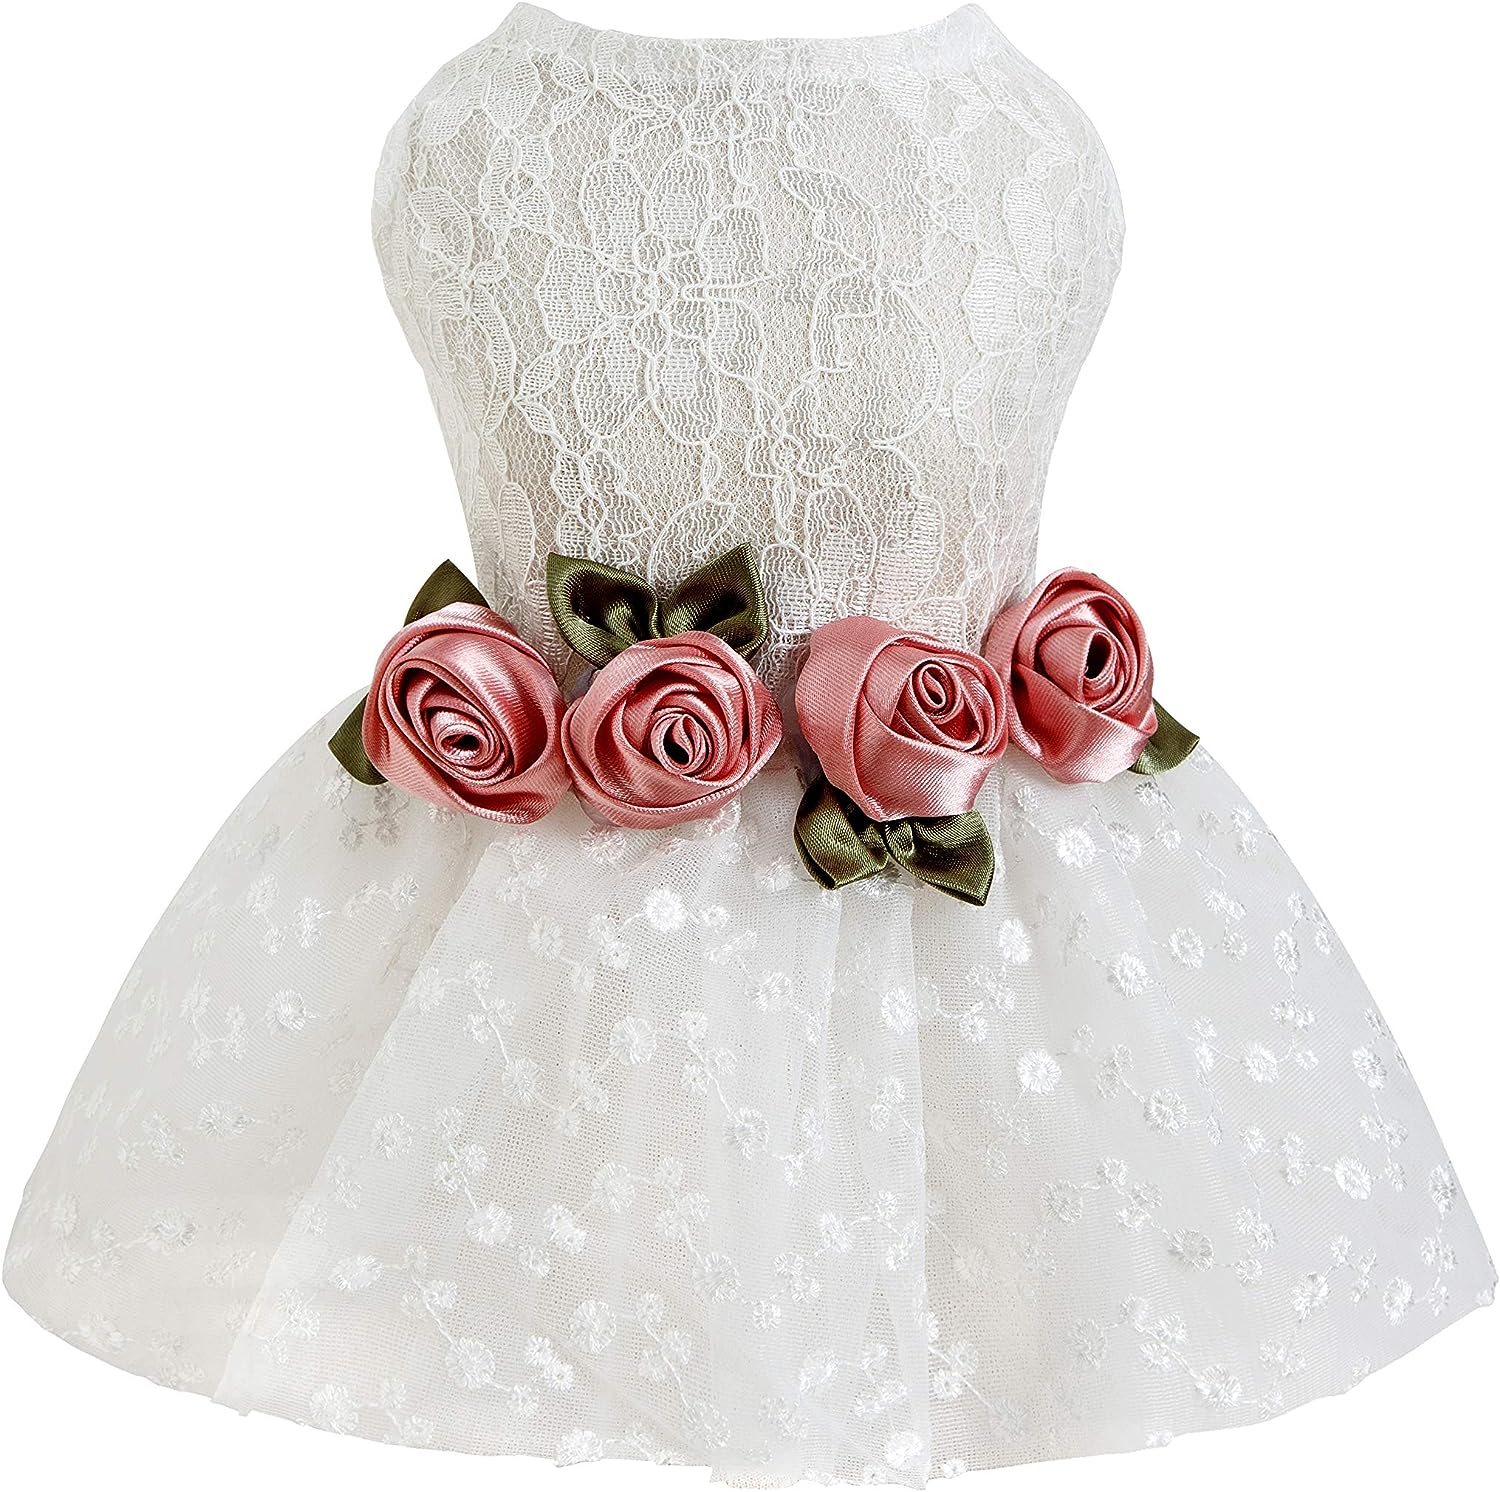 Fitwarm luxe rose lace huisdier hond trouwjurk bruid kleding formele kleding